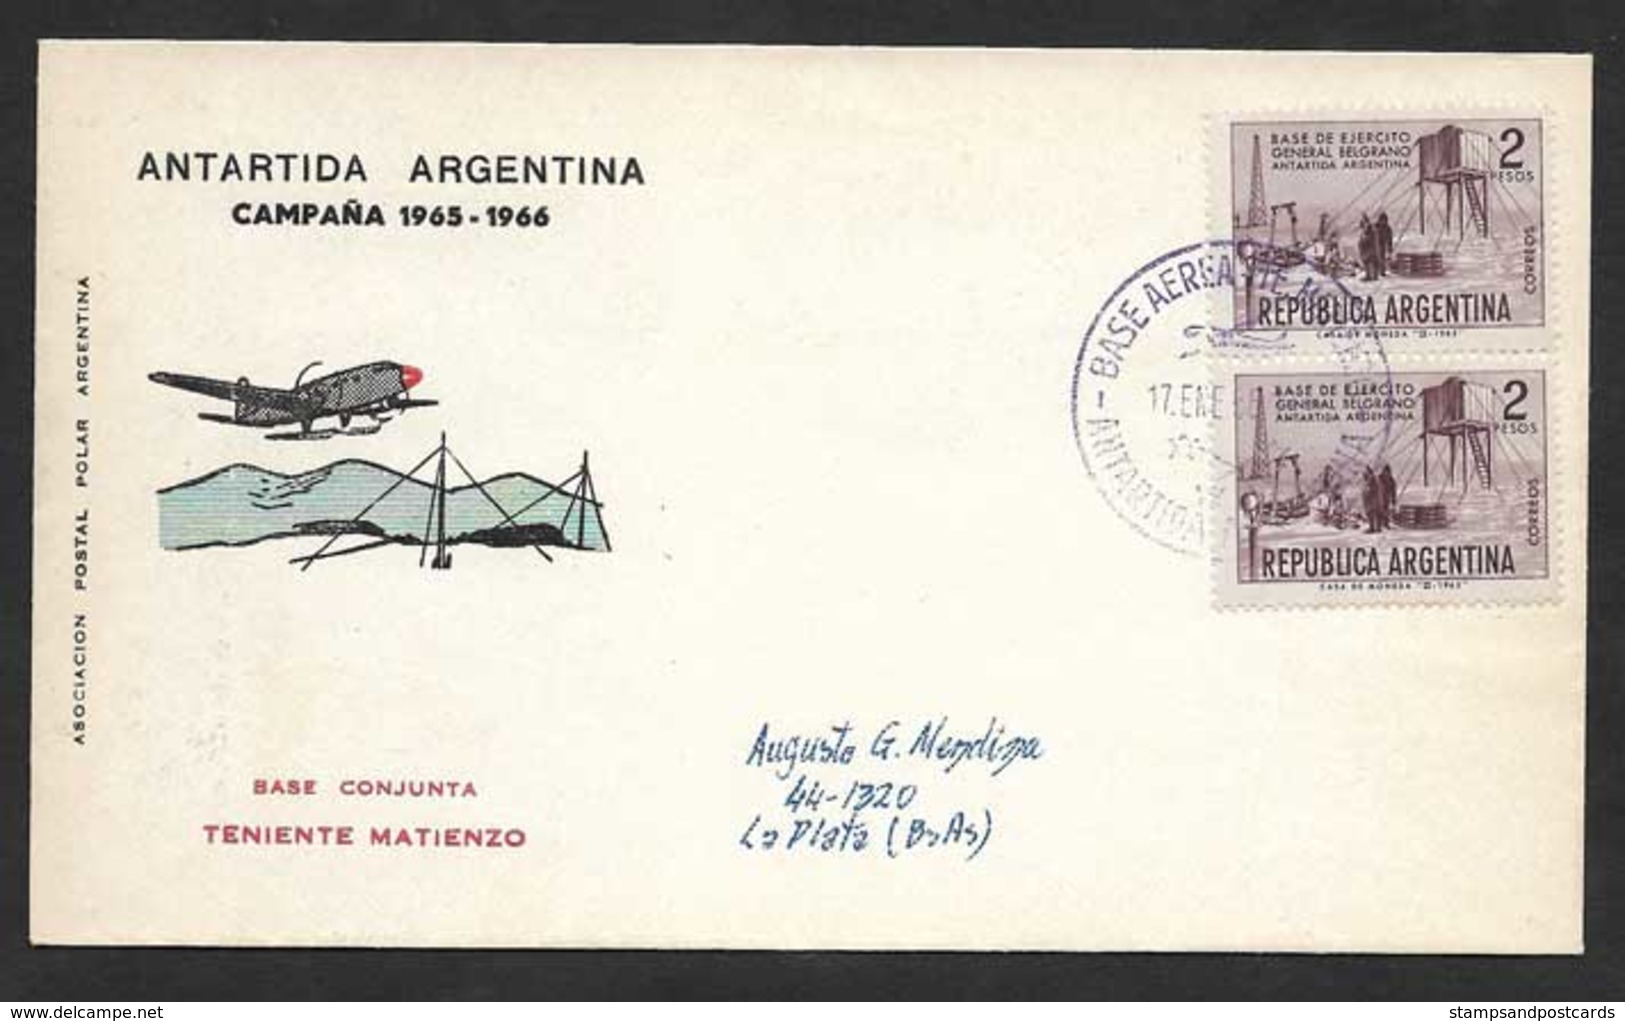 Argentine Base Aerienne Teniente Matienzo Antarctique 1966 Argentina Antartic Aerial Base - Vuelos Polares